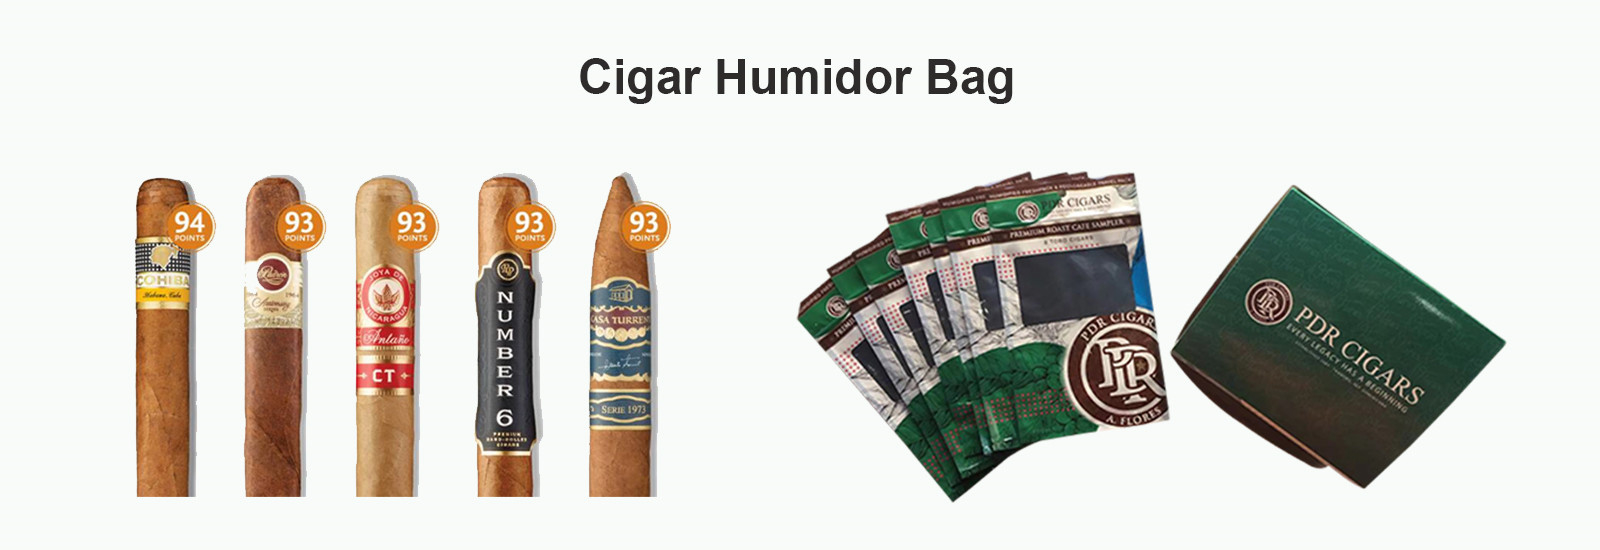 کیسه Humidor سیگار